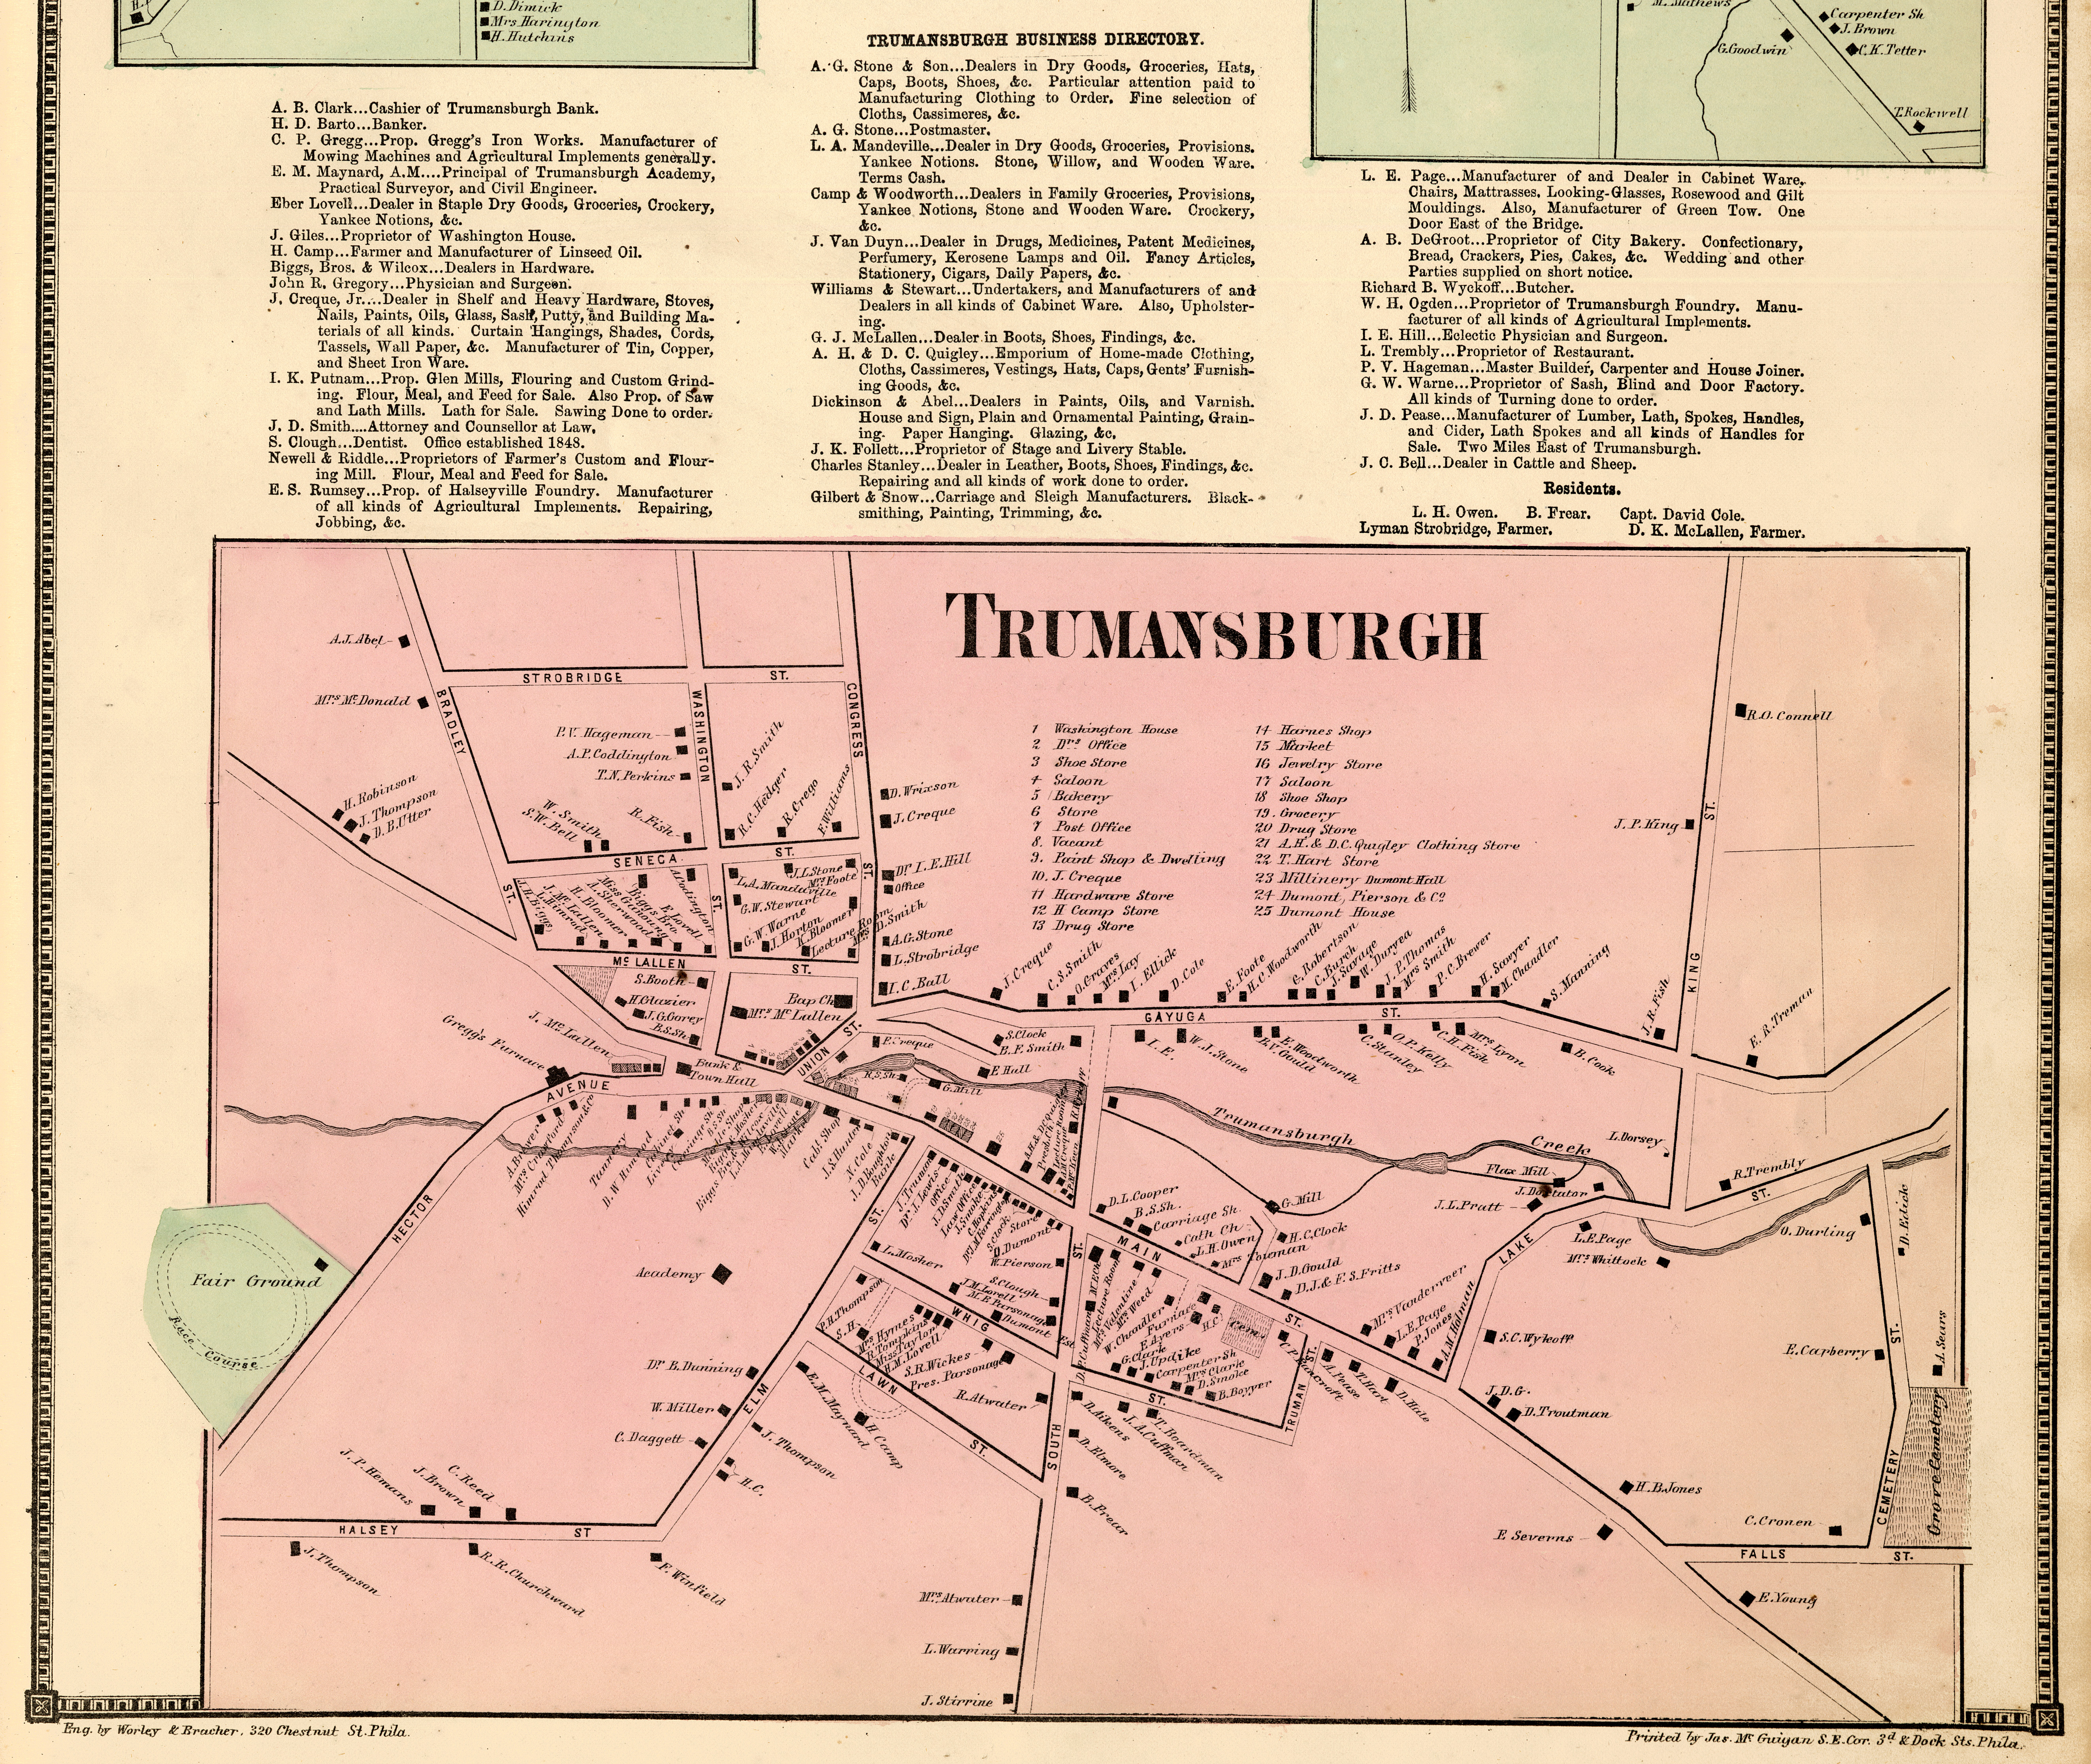 Trumansburg 1866 Tompkins County Atlas